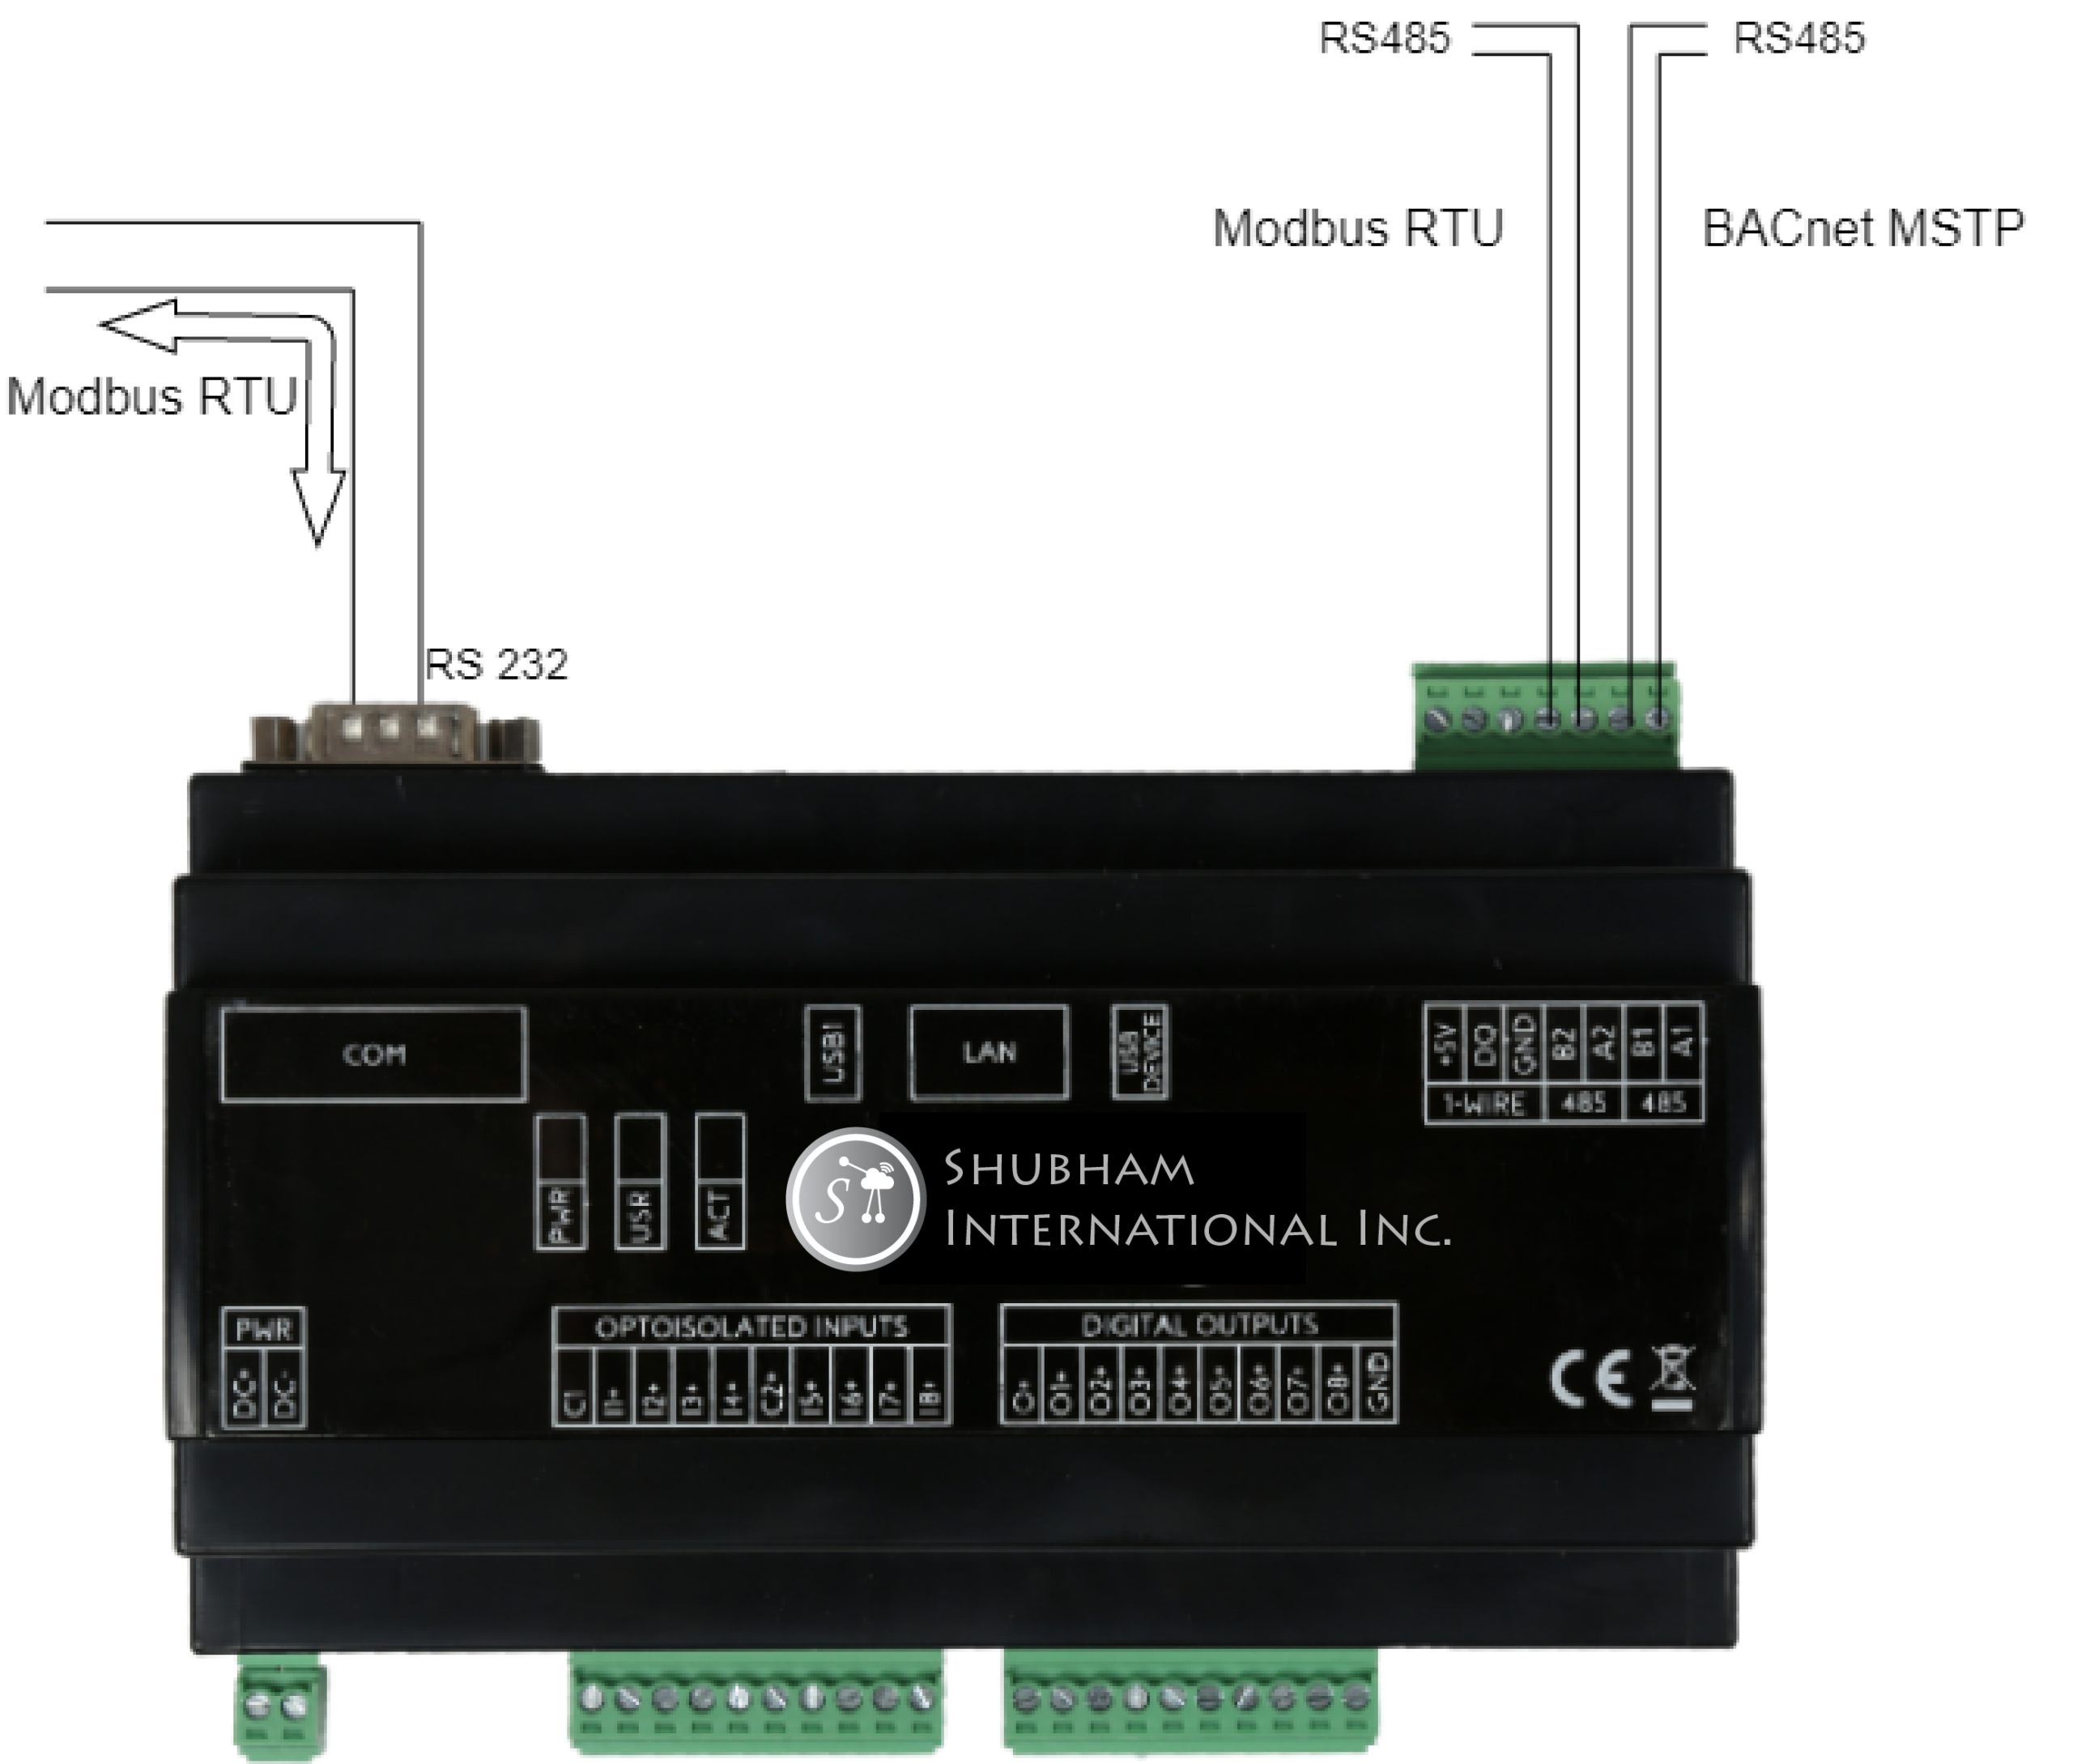 BACnet MSTP - Modbus RTU Converter